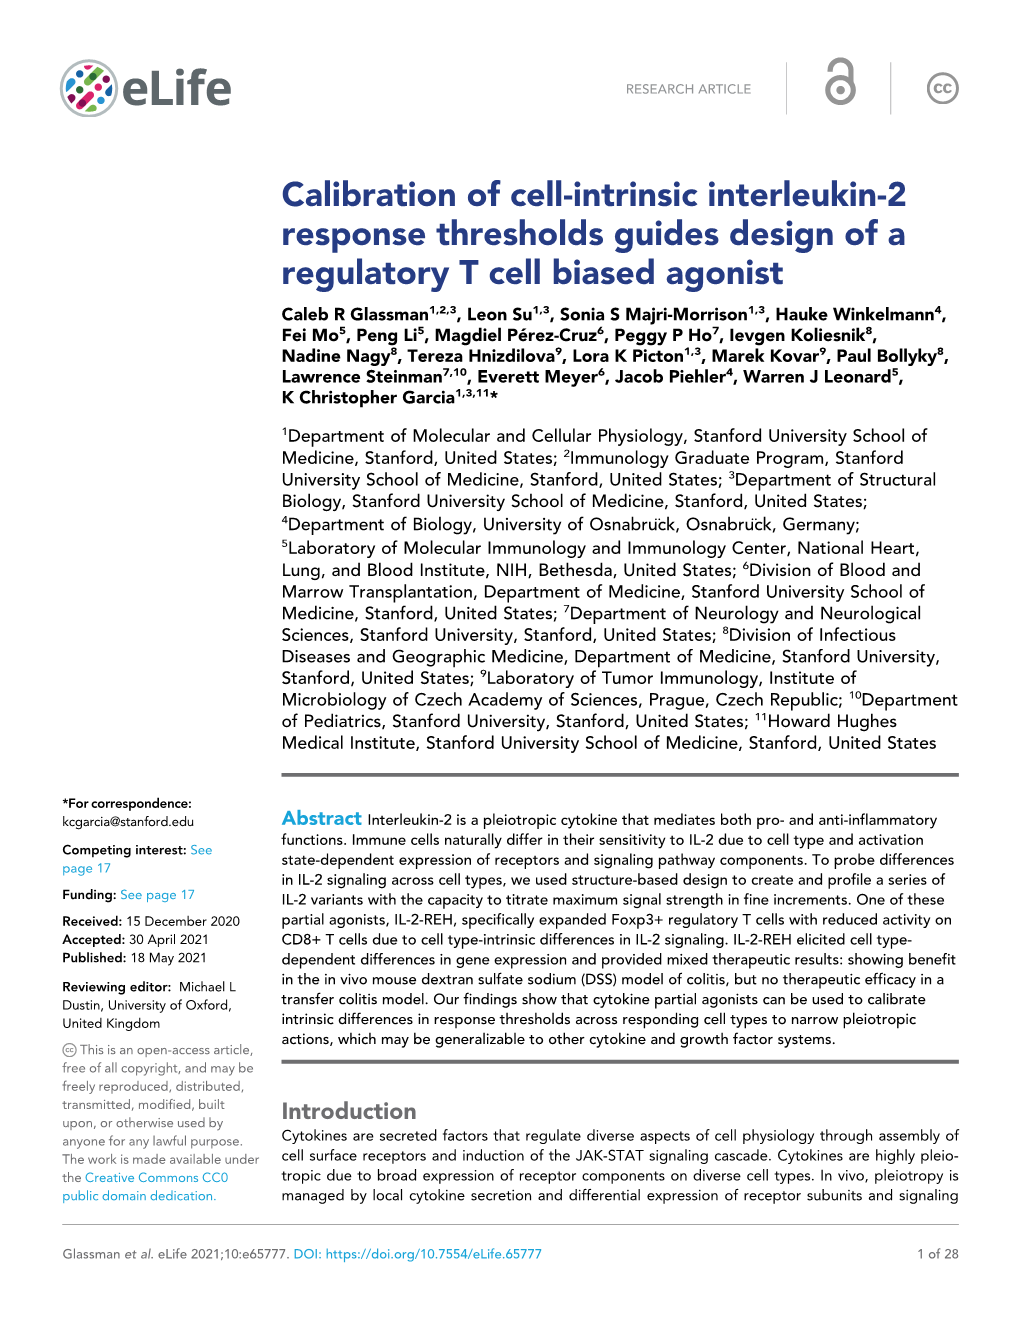 Calibration of Cell-Intrinsic Interleukin-2 Response Thresholds